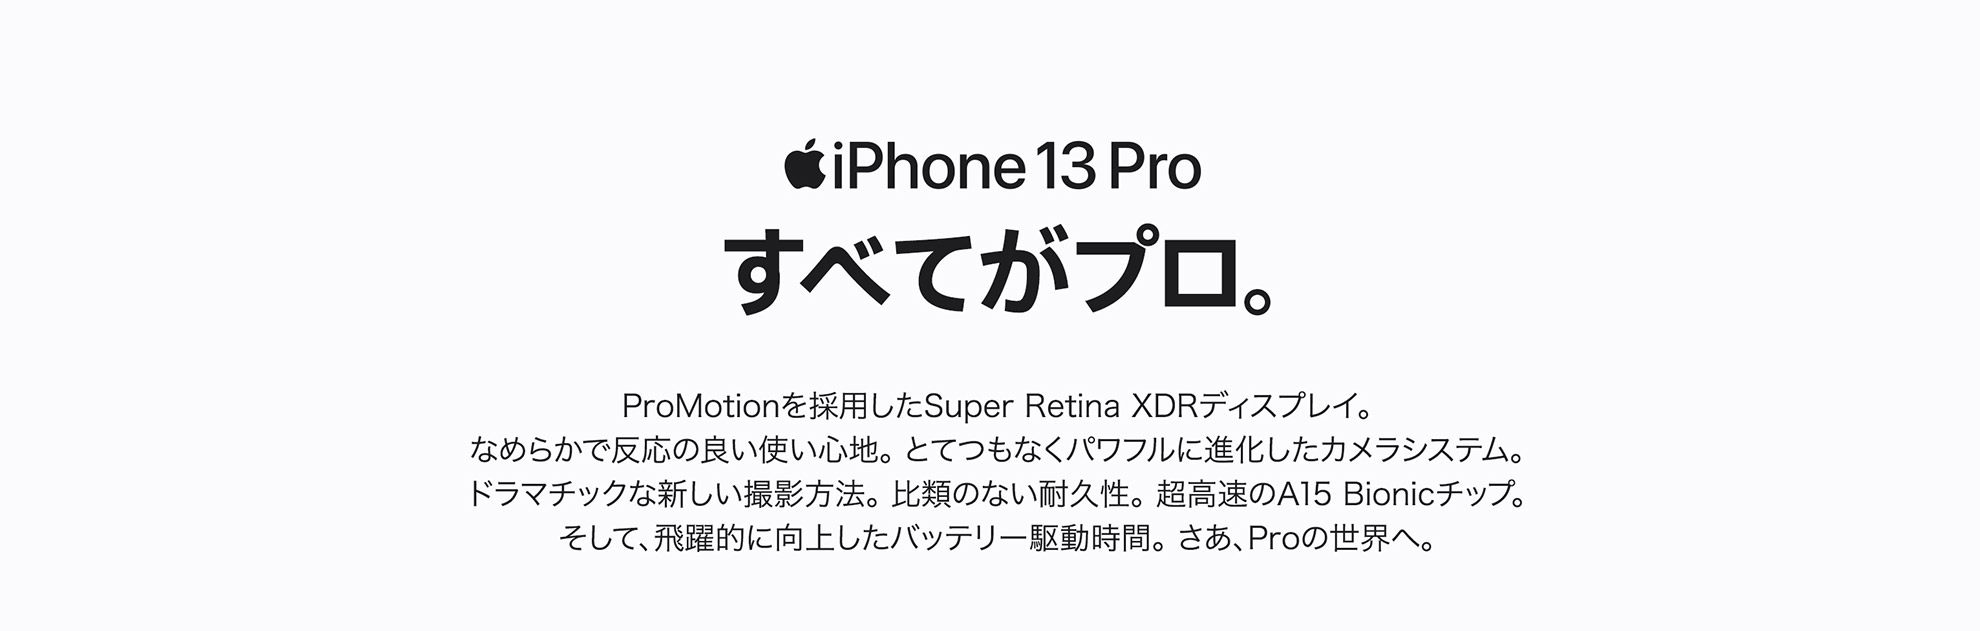 iPhone 13 Pro、iPhone 13 Pro Max